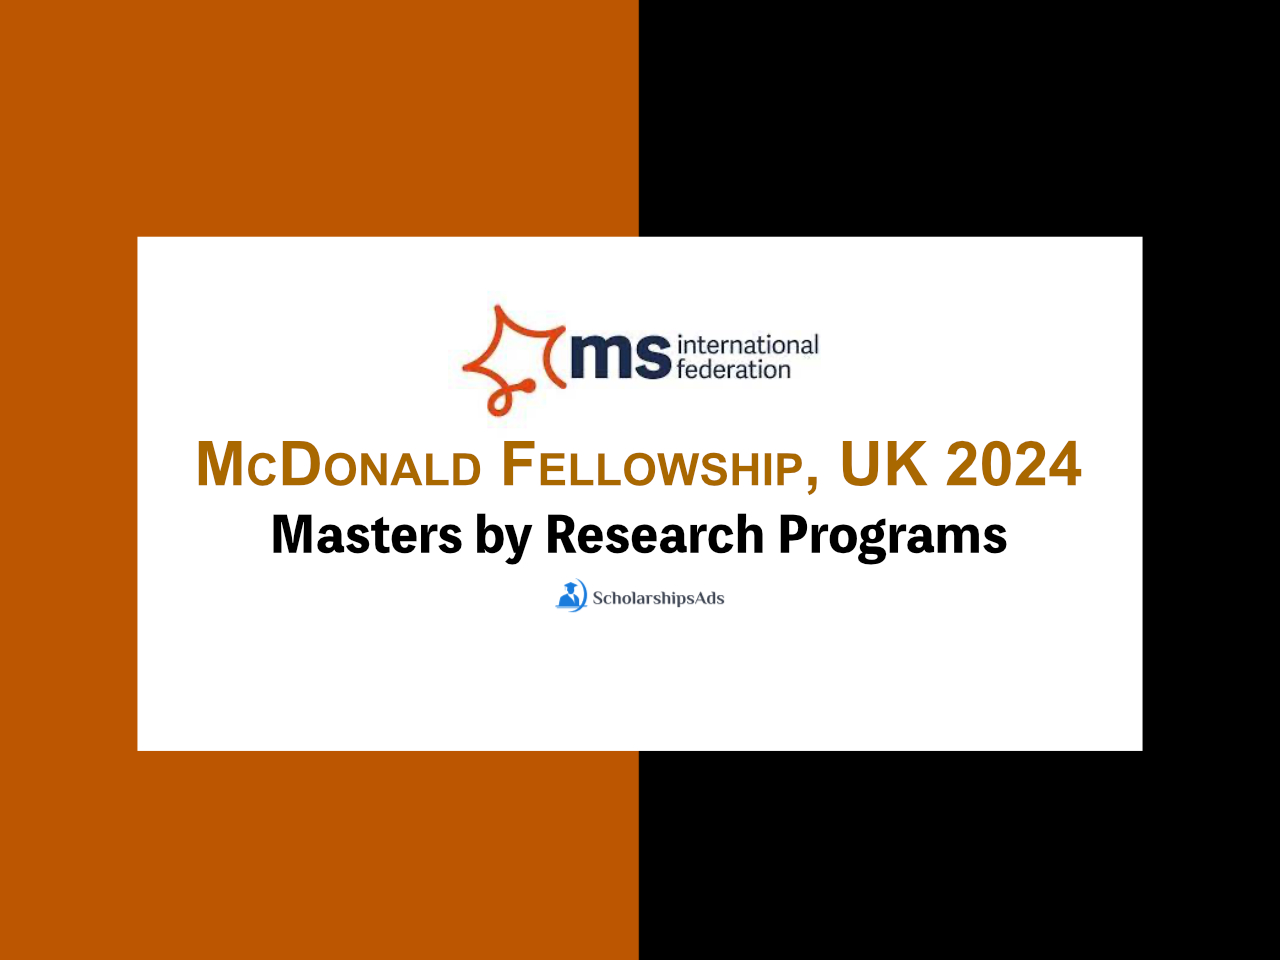  McDonald Fellowships Announces MS Scholarships. 